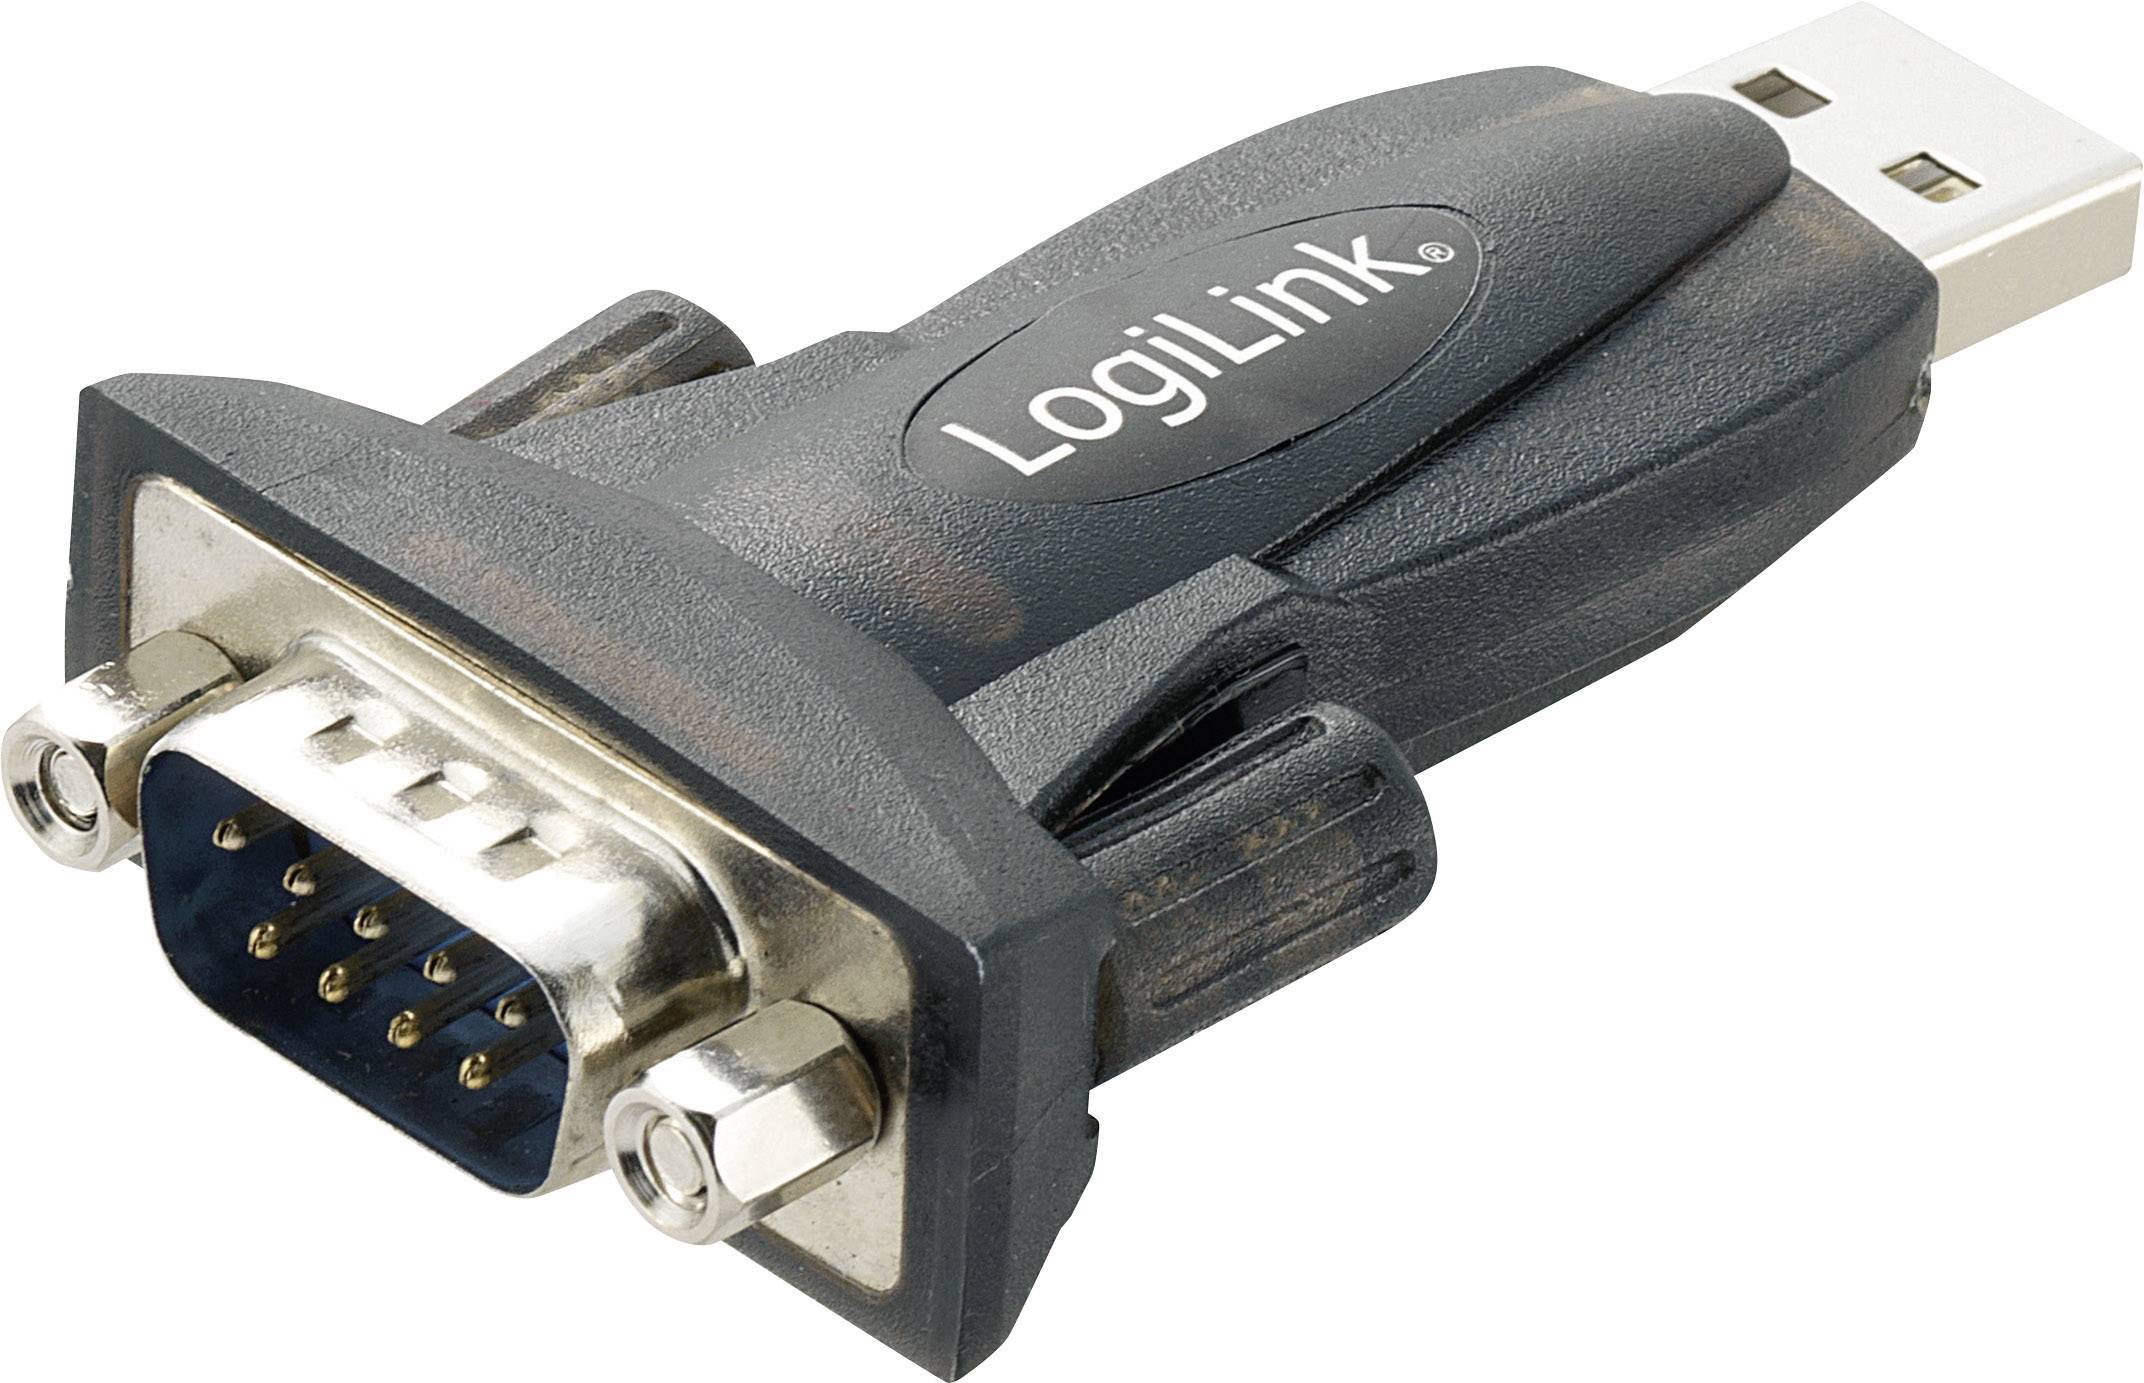 Logilink usb 2.0 serial adapter driver